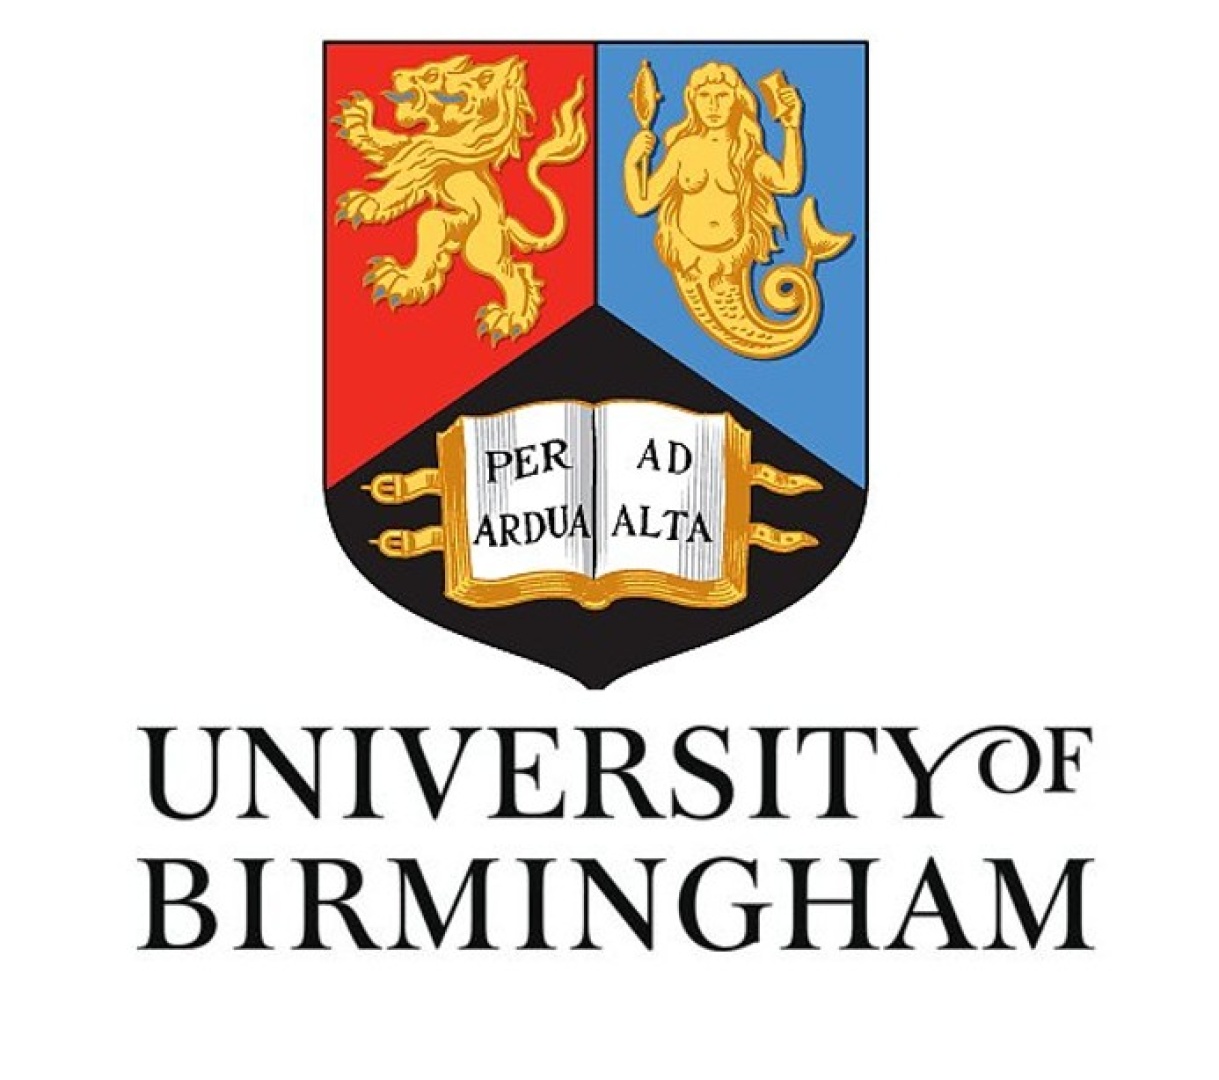 University college of Birmingham